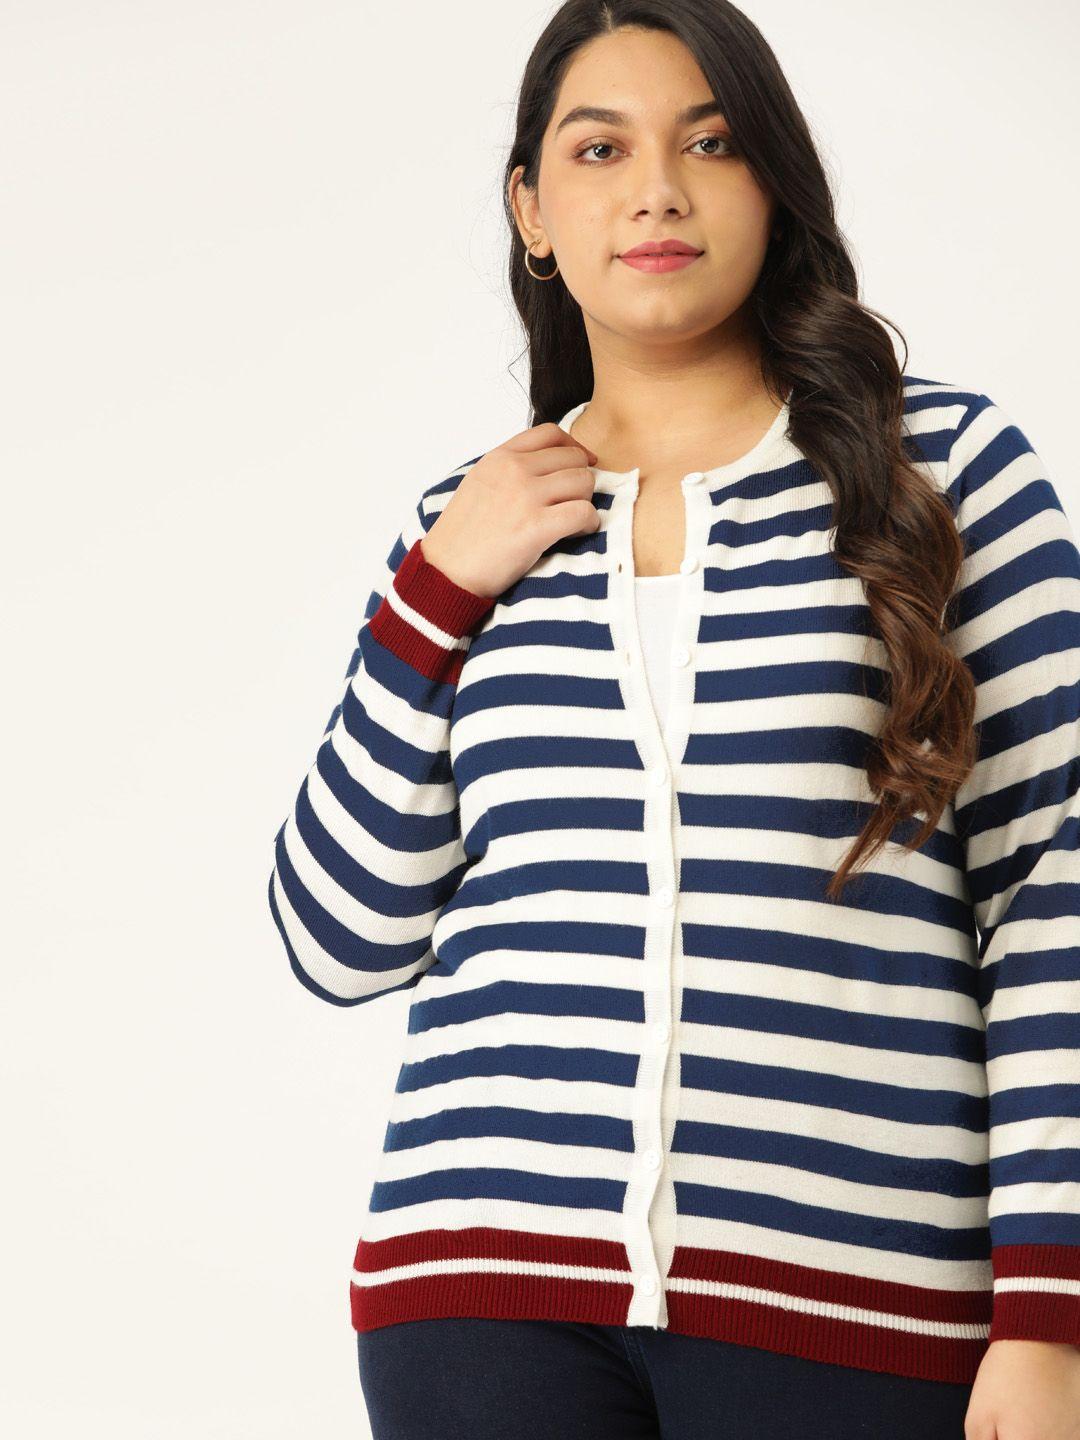 sztori women plus size white & navy blue striped cardigan